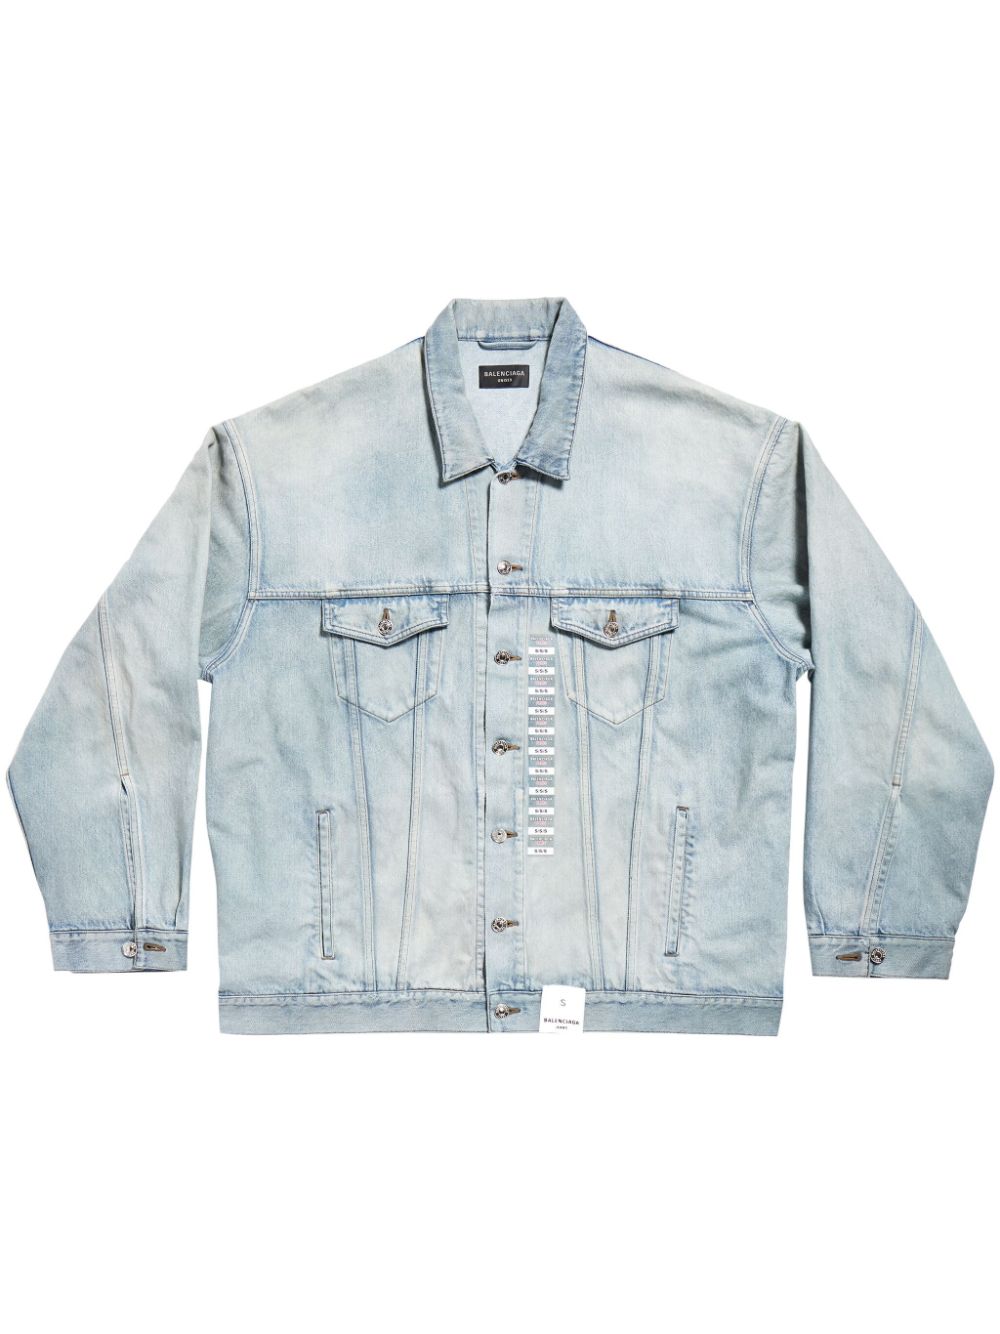 Unisex Blue Denim Jacket - Buttoned Front Pockets - Balenciaga Size Guide